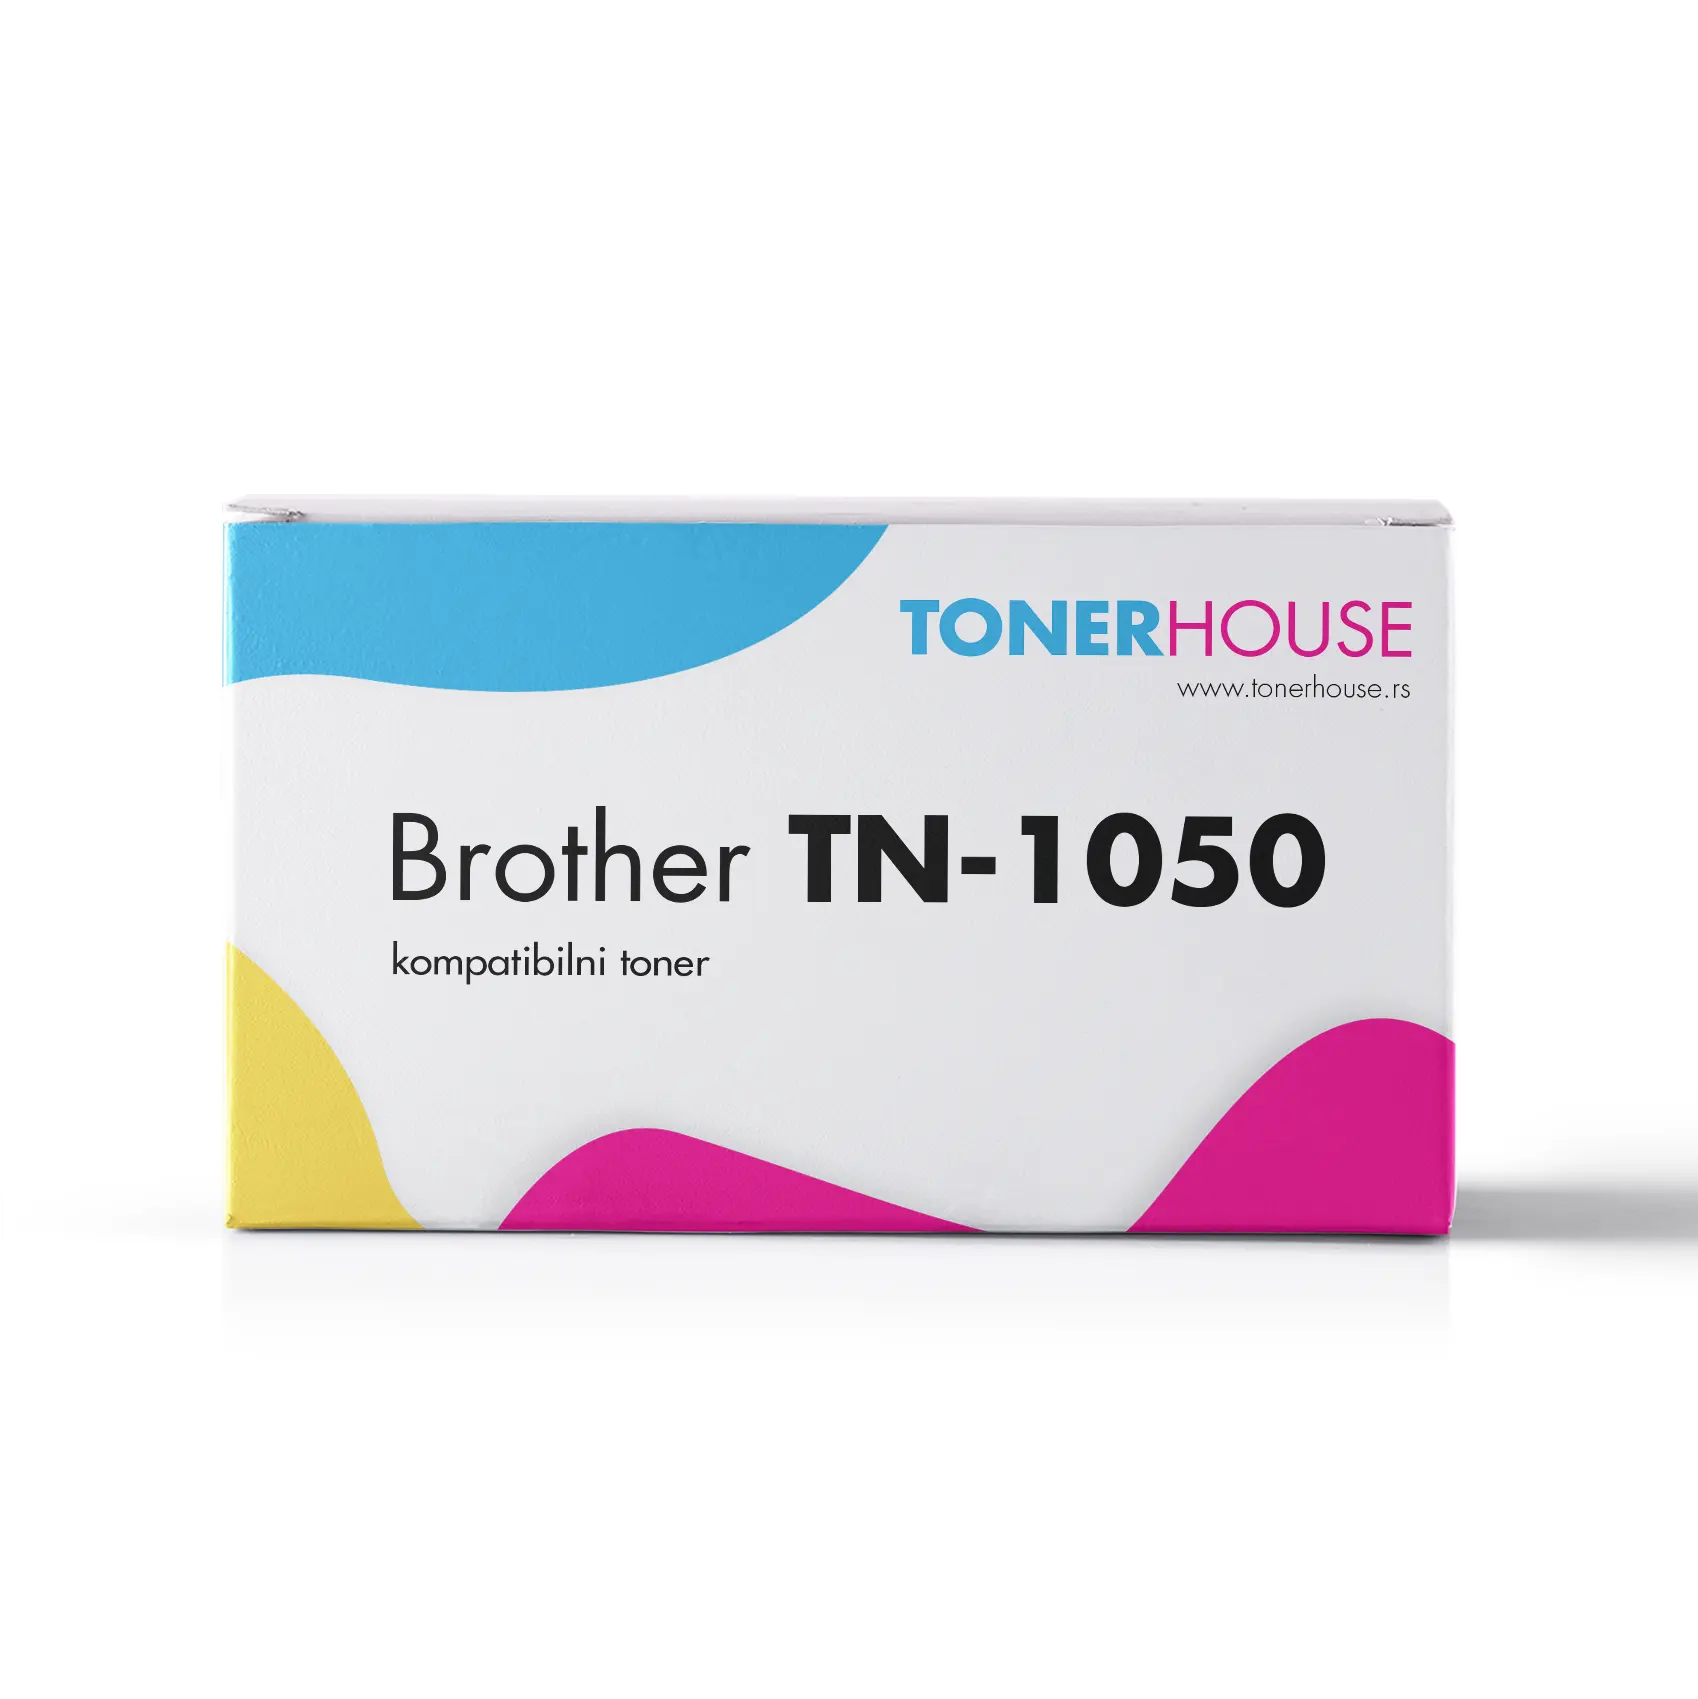 Brother TN-1050 Toner Kompatibilni